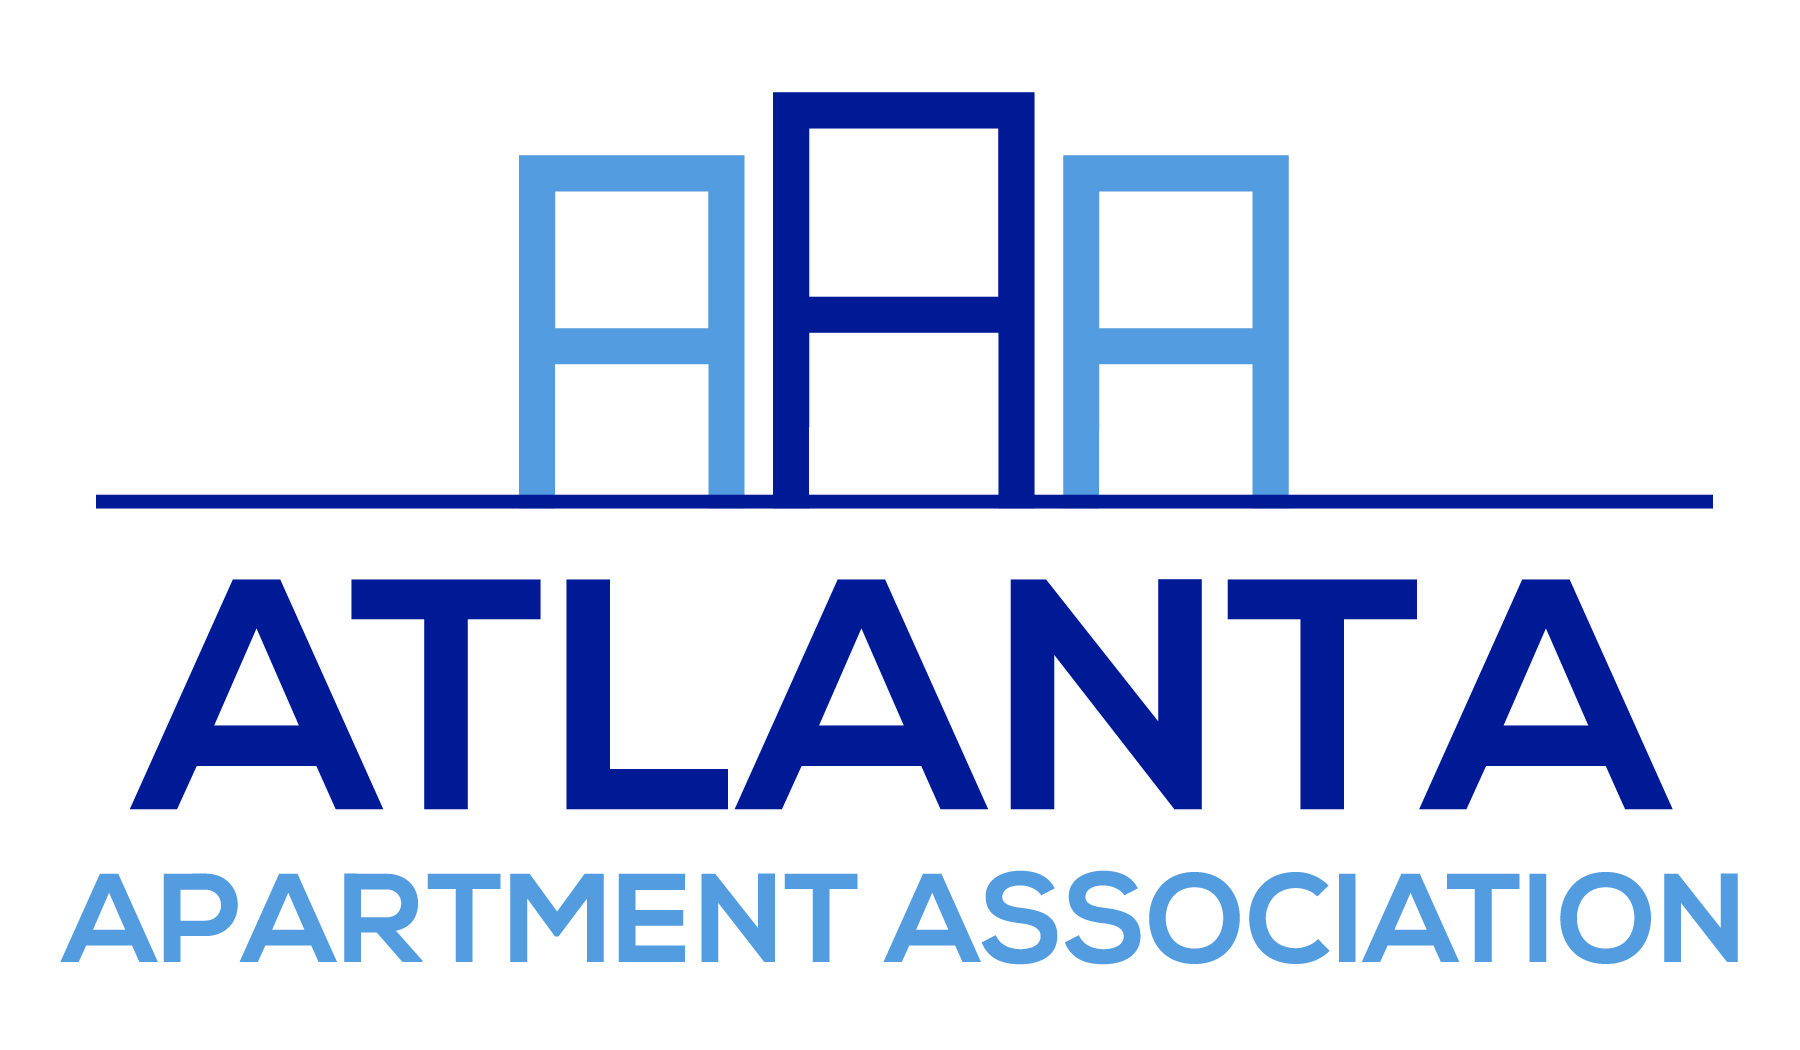 Atlanta Apartment Association logo